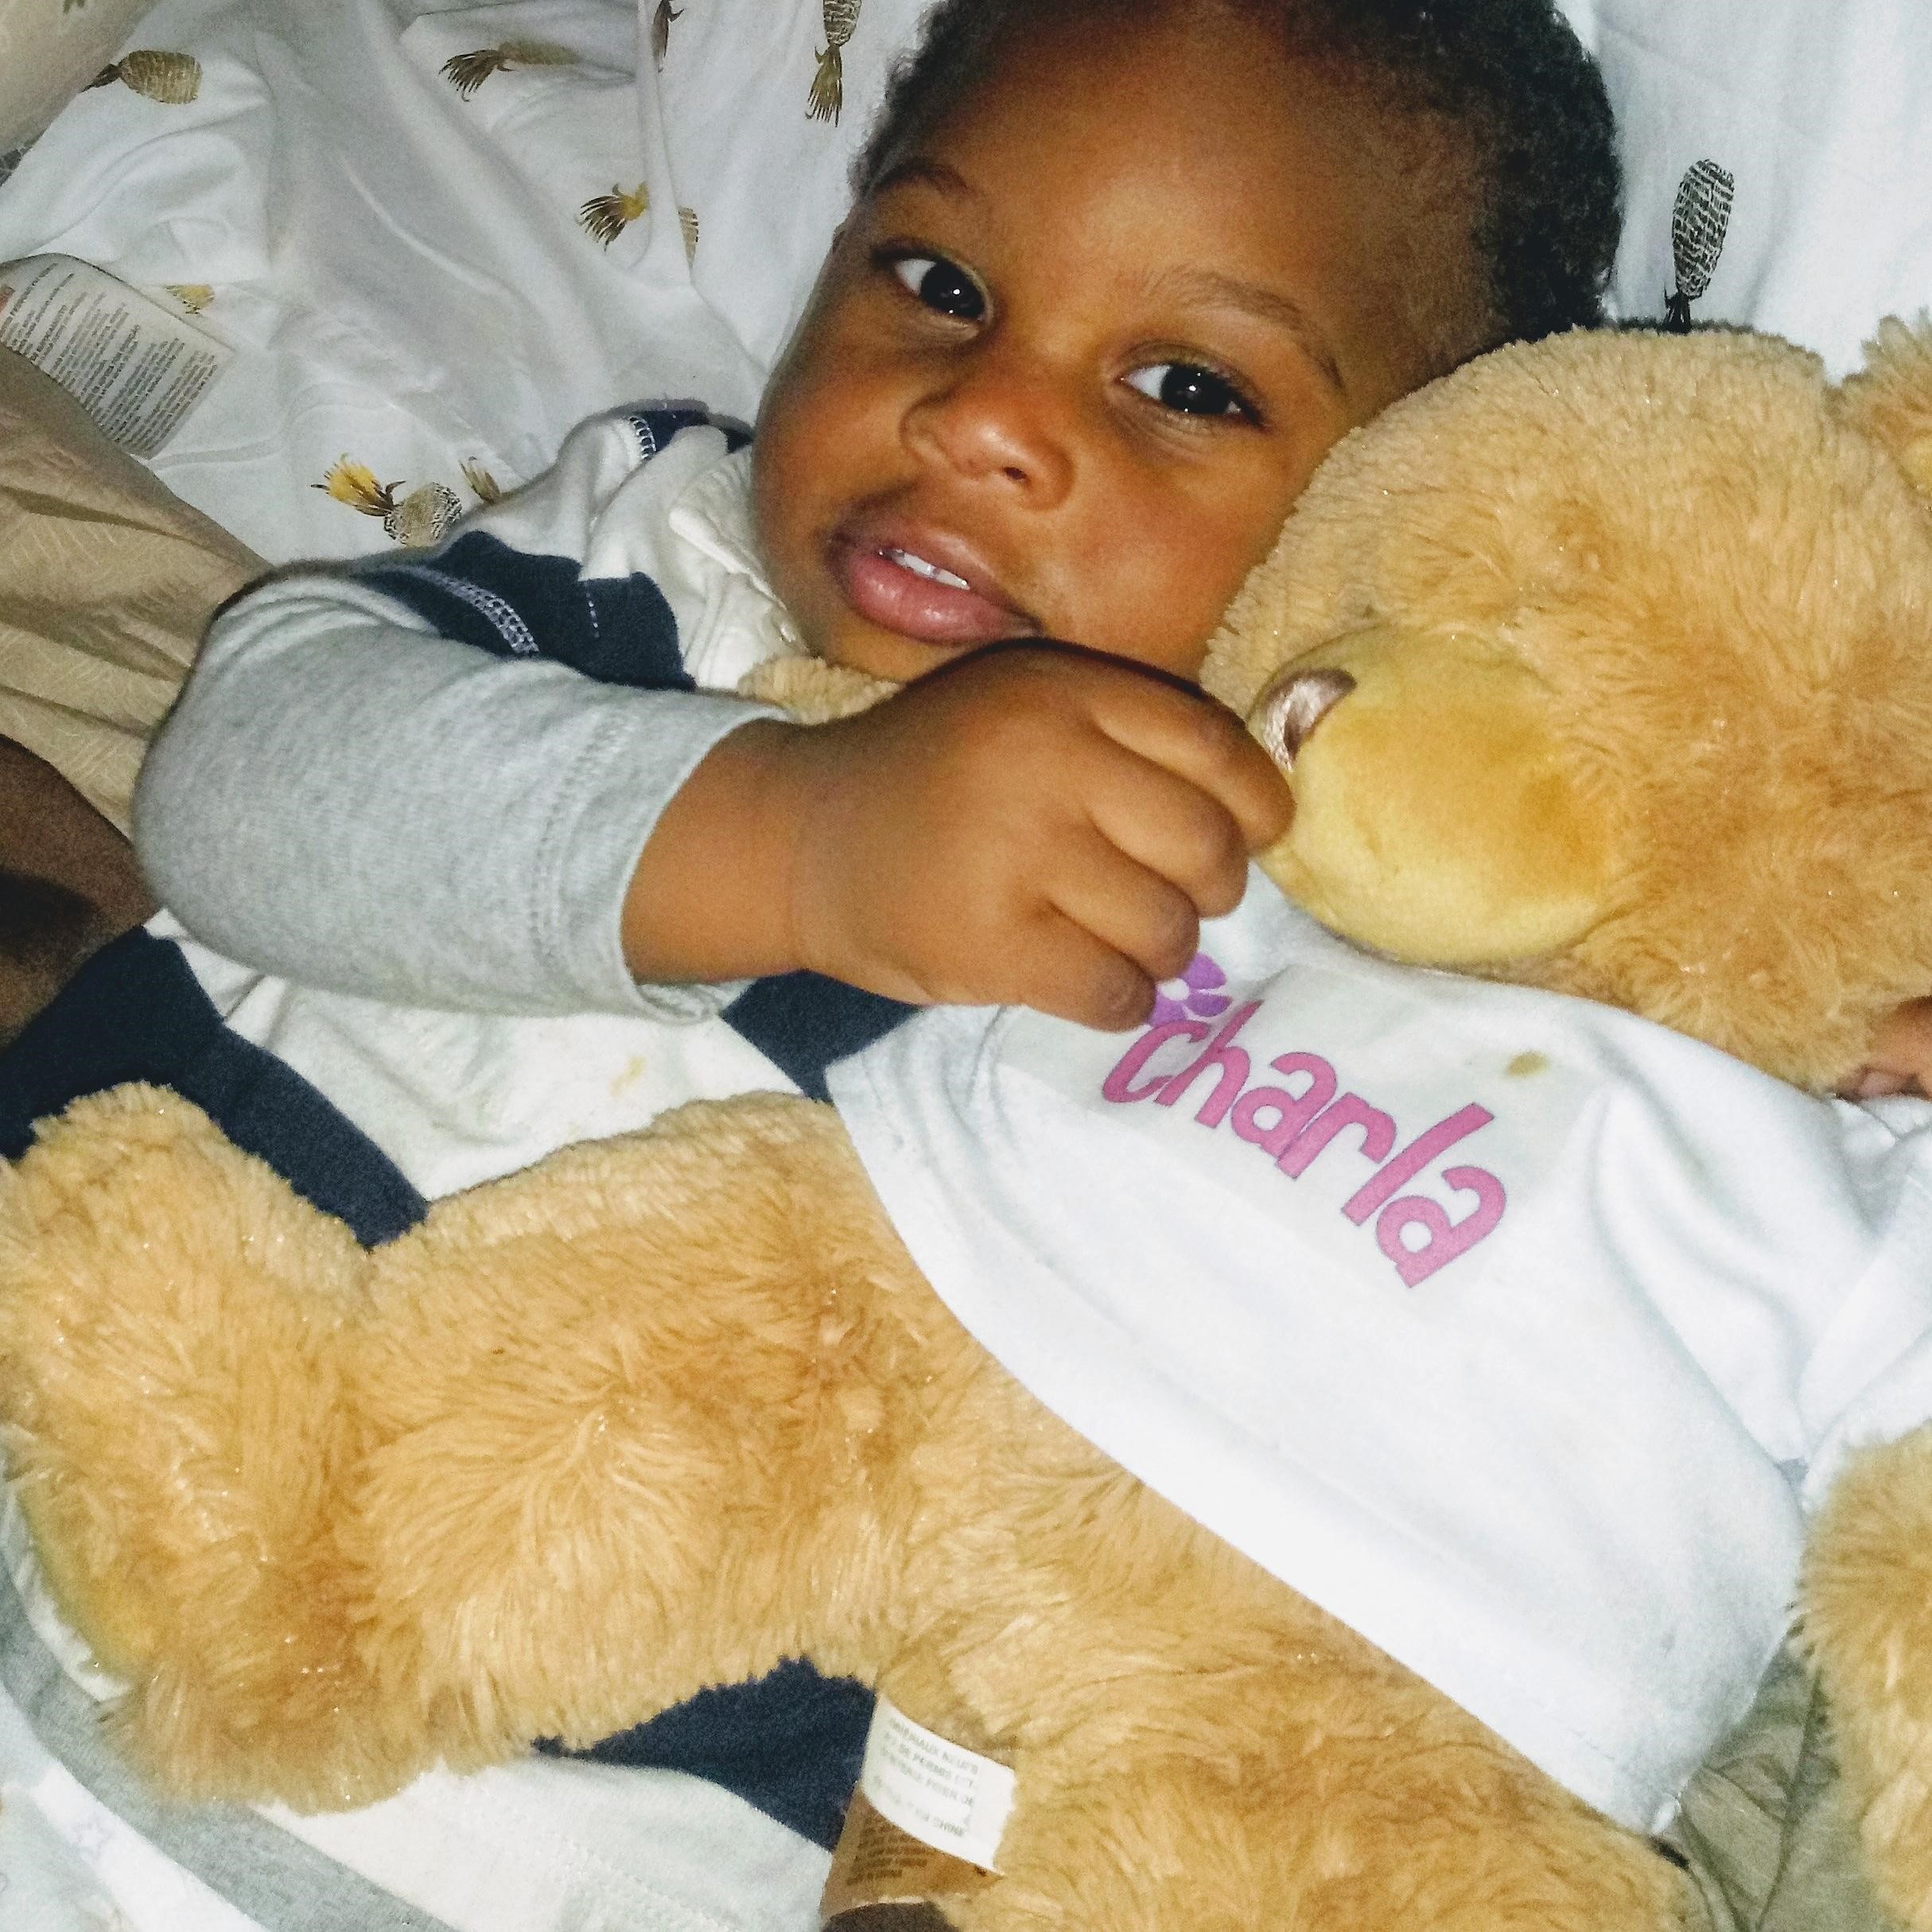 baby holding teddy bear